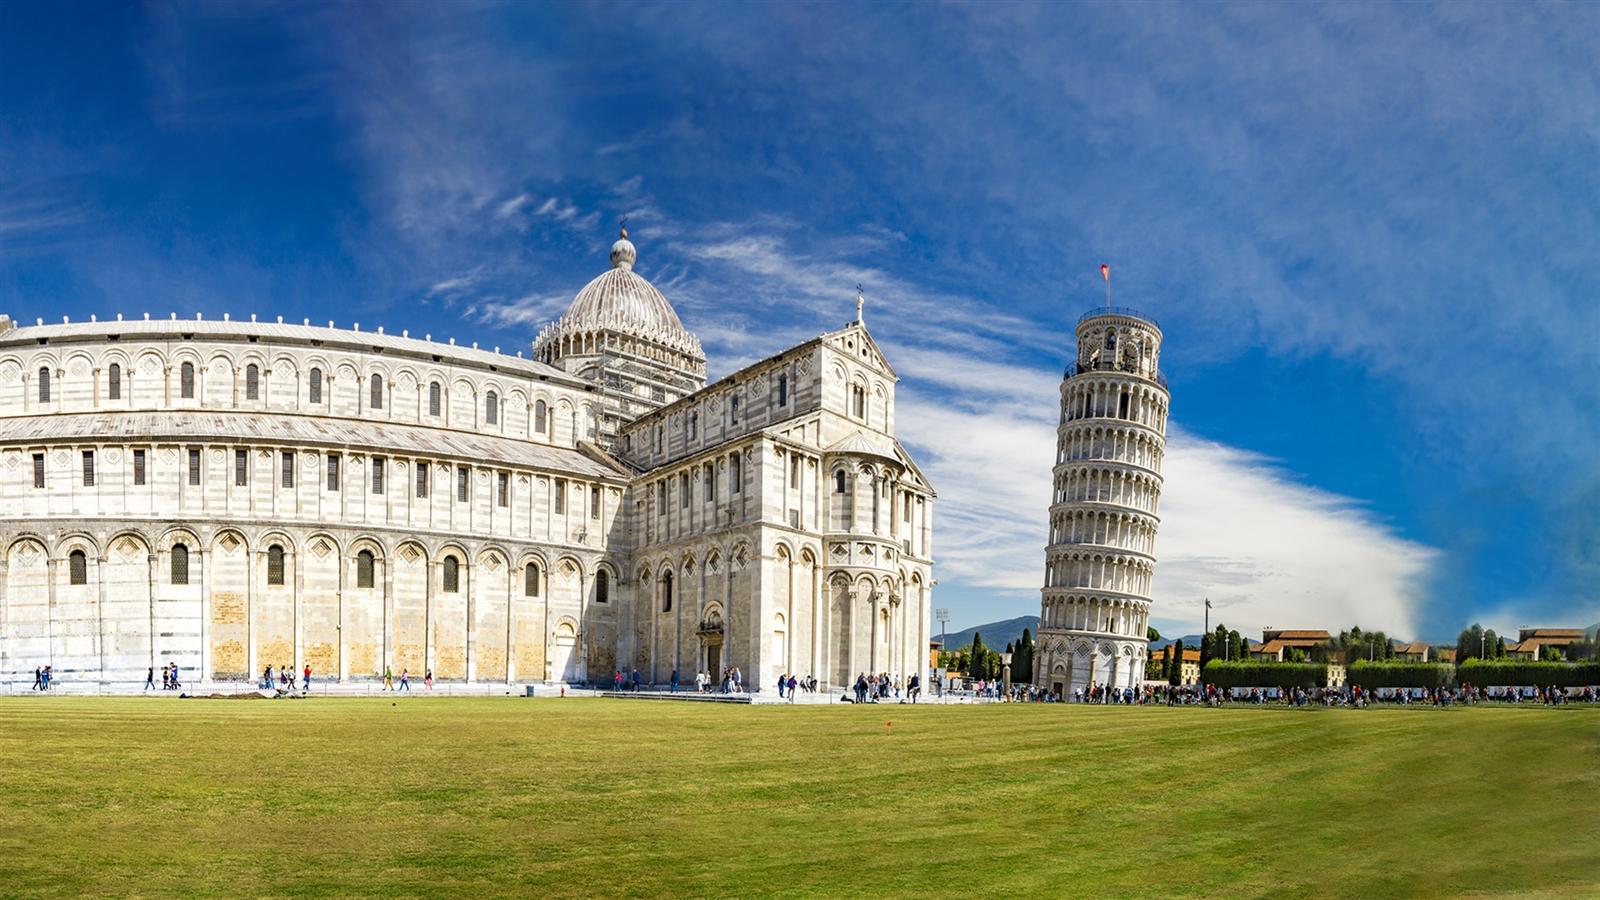 Turm Pisa Image